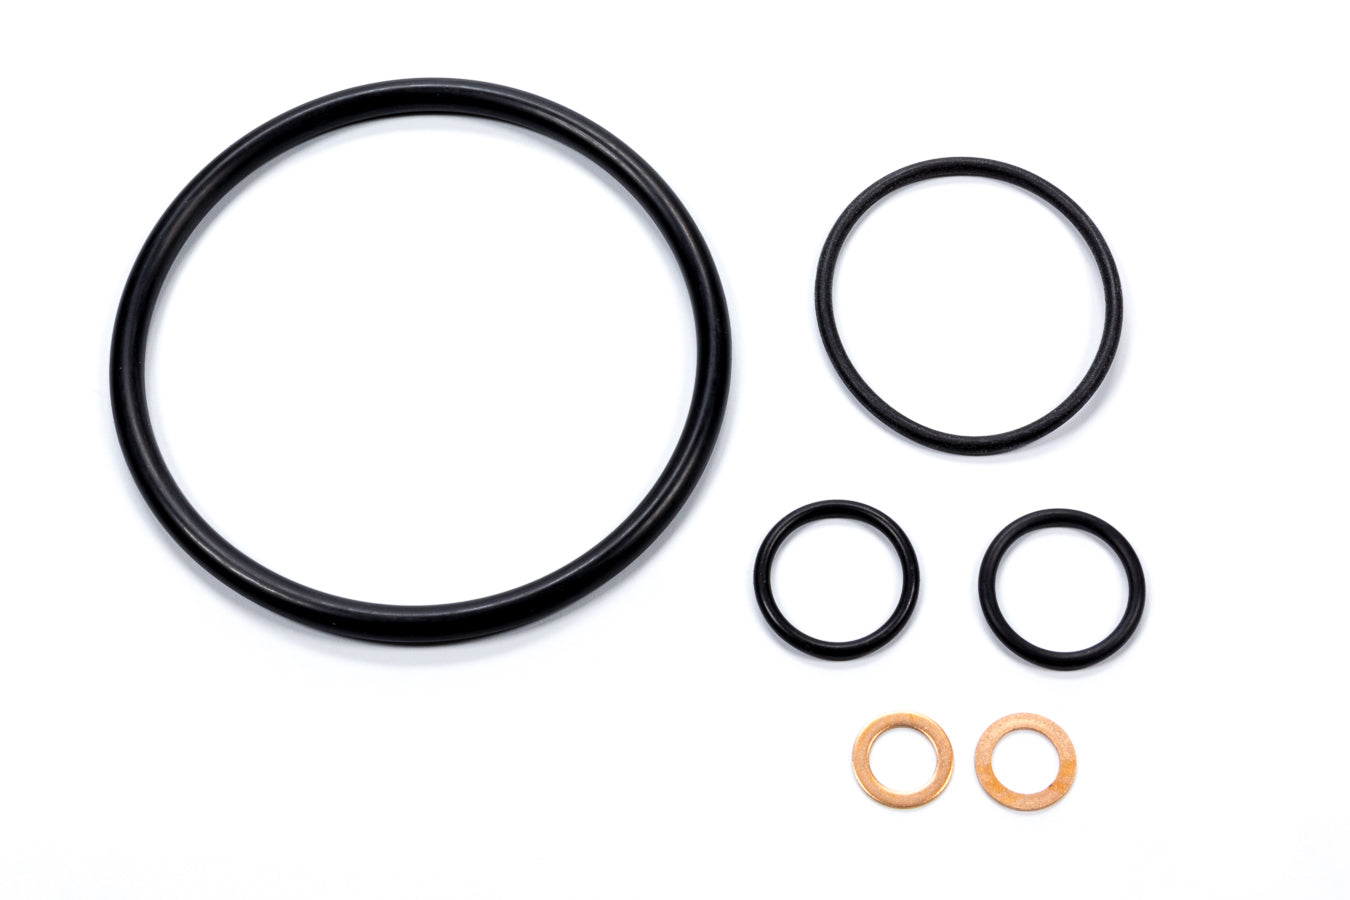 Barnes O-Ring Kit for Oil Filter Adapters BARORK-109